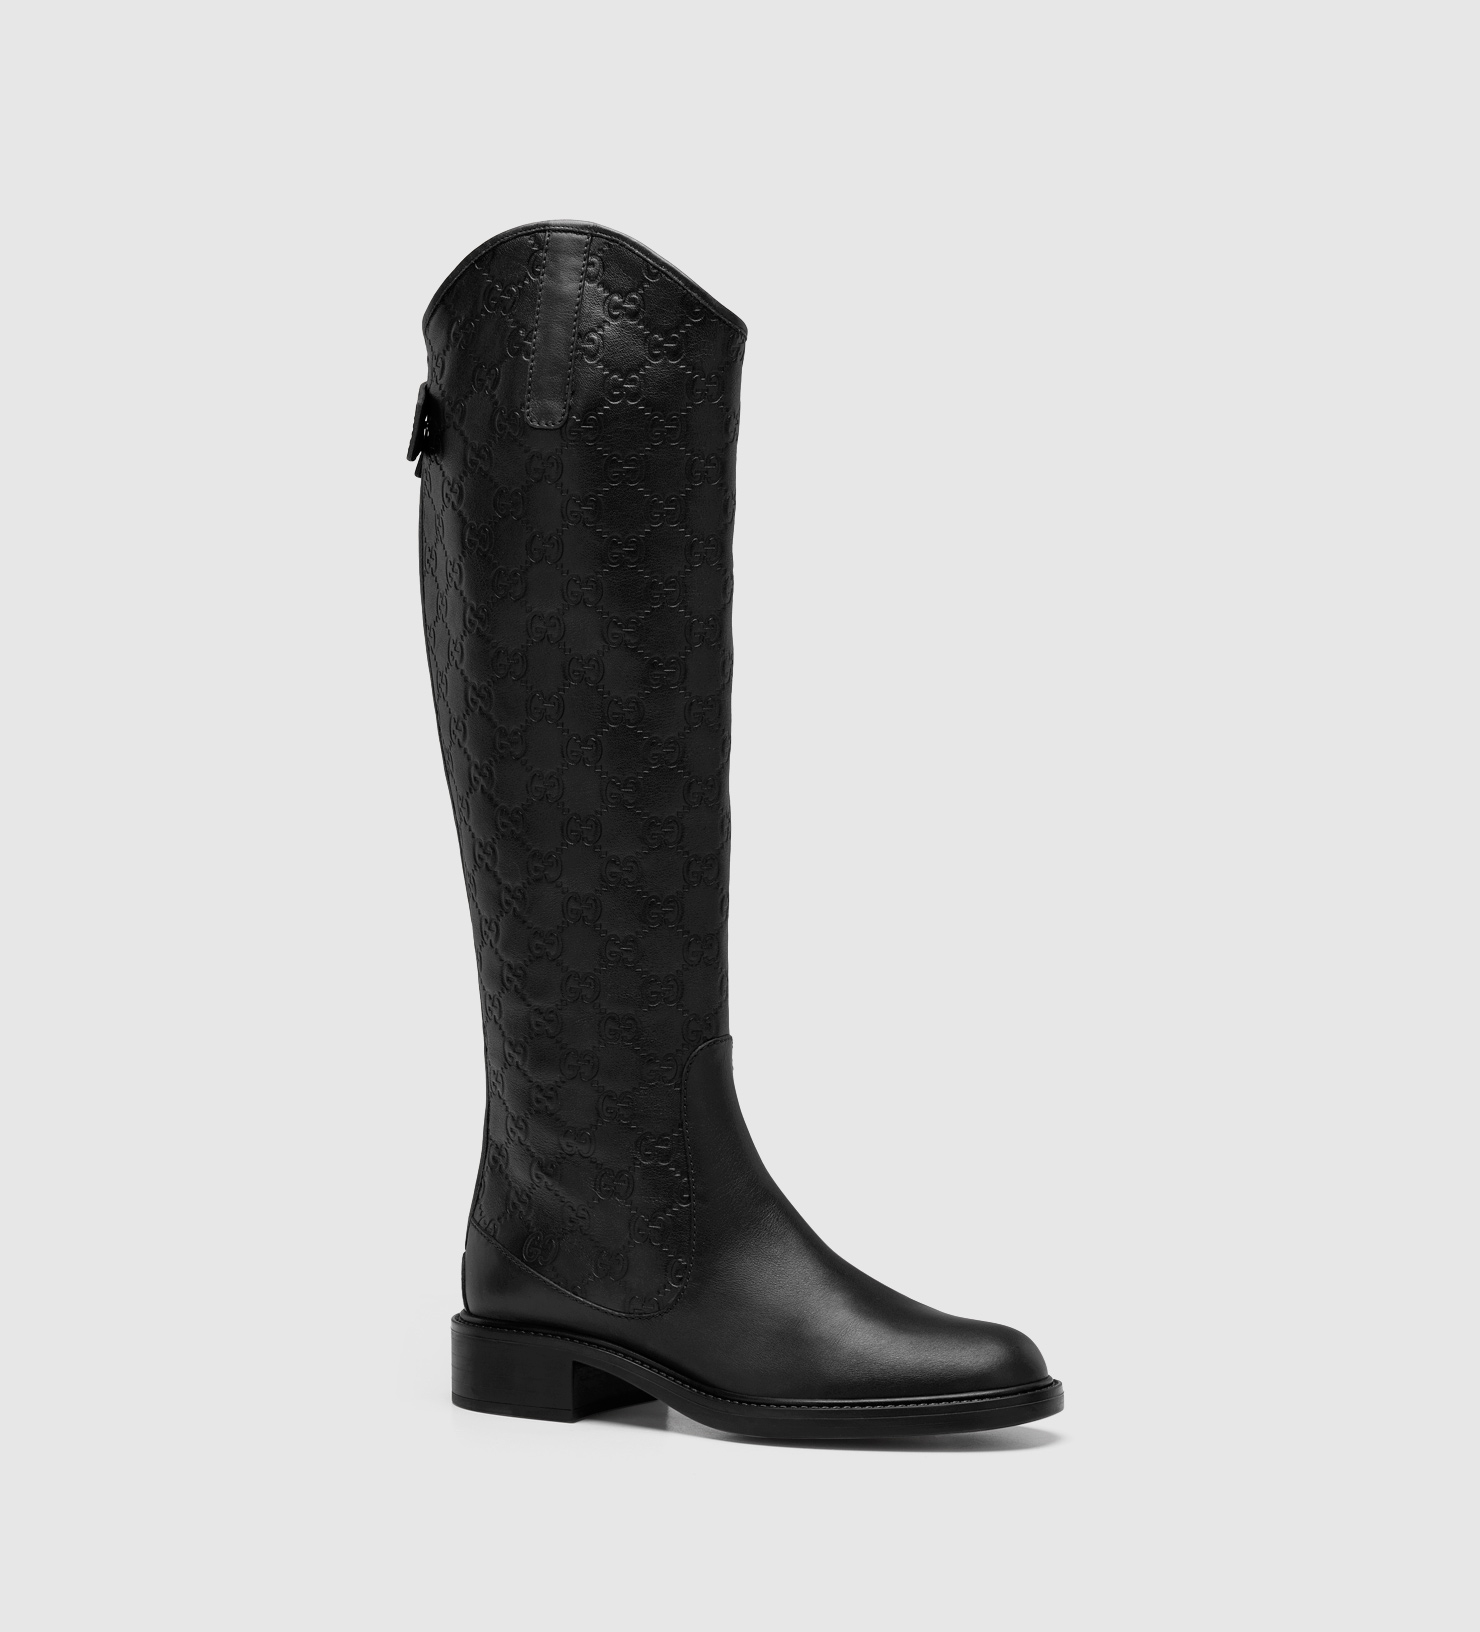 Lyst - Gucci Maud Black Leather Tall Flat Boot in Black